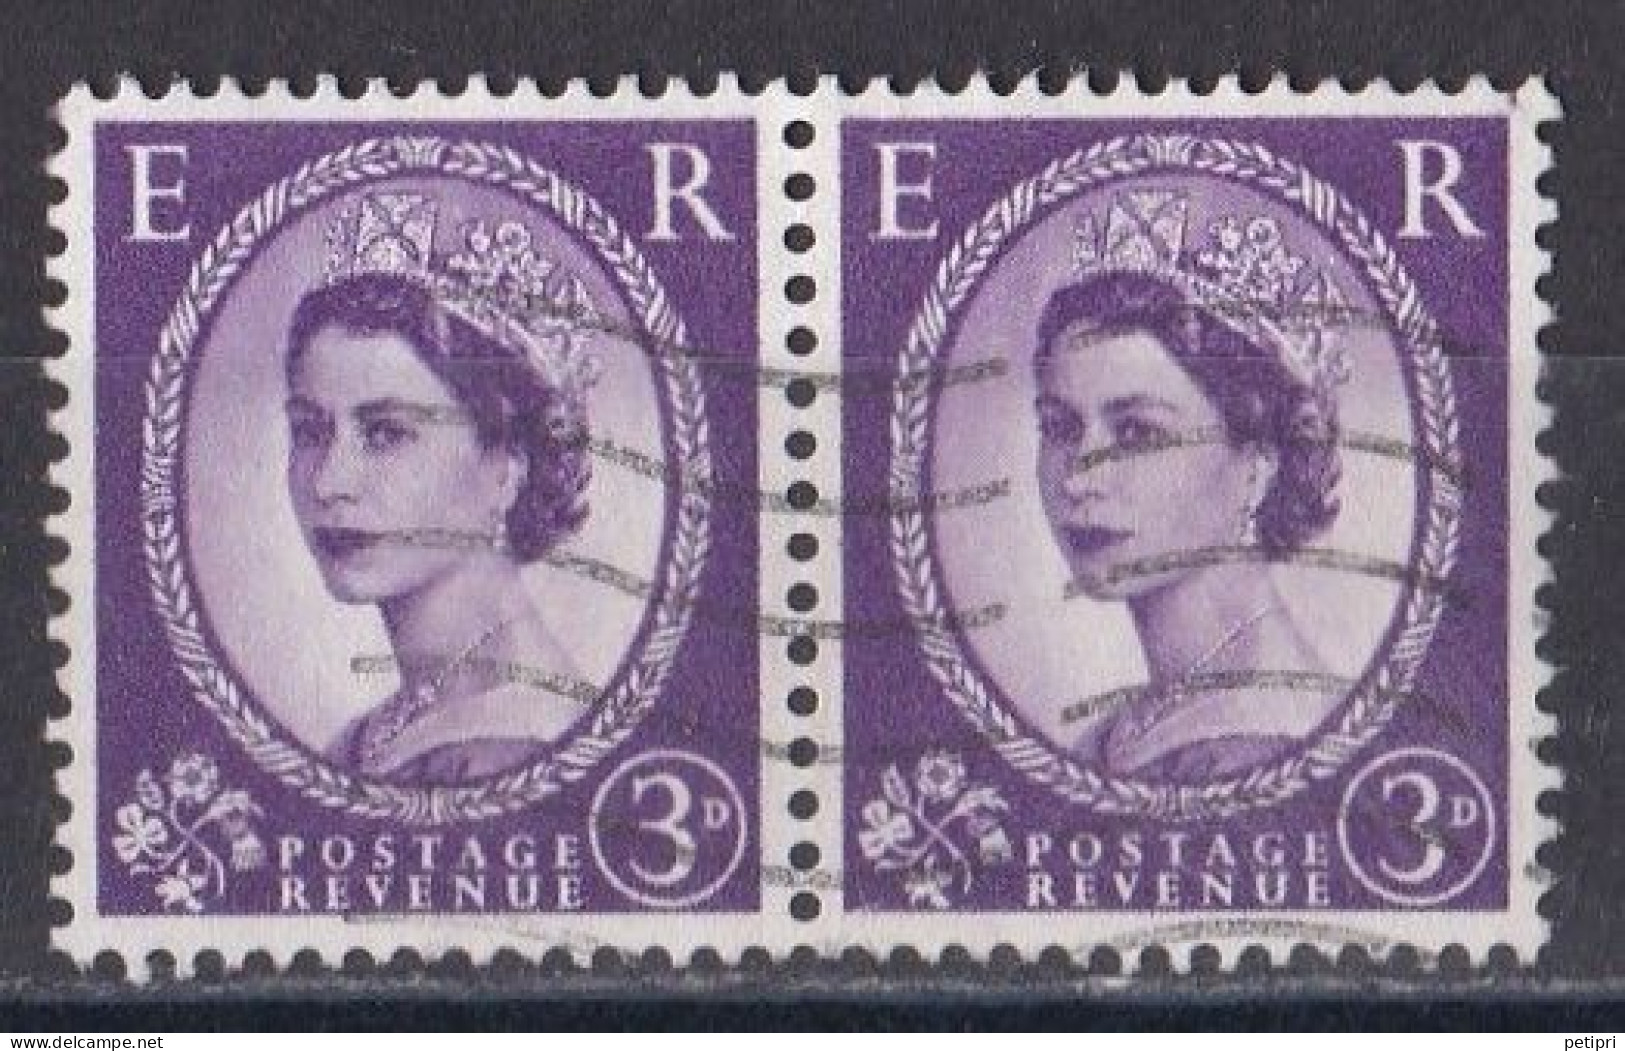 Grande Bretagne - 1952 - 1971 -  Elisabeth II -  Y&T N °  267  Paire  Oblitérée - Usados